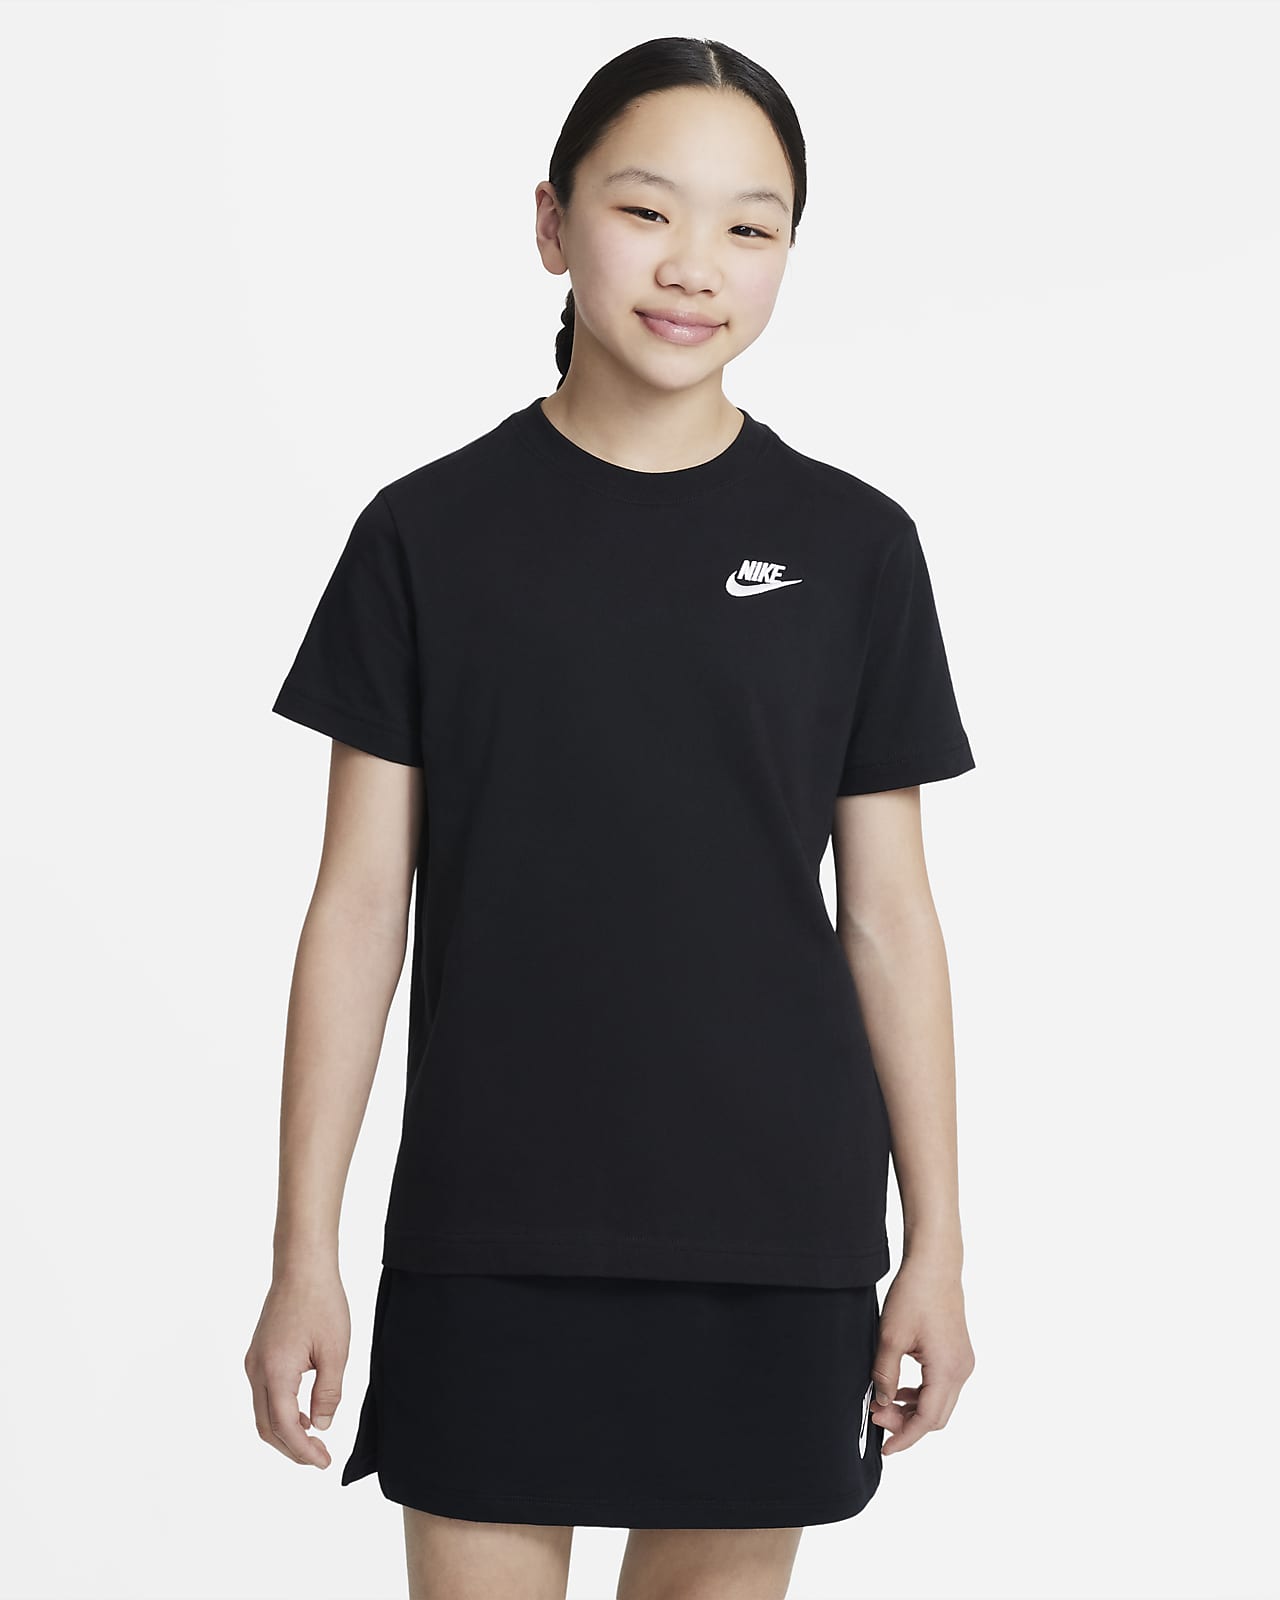 (Girls\') T-Shirt. Sportswear Big Kids\' Nike